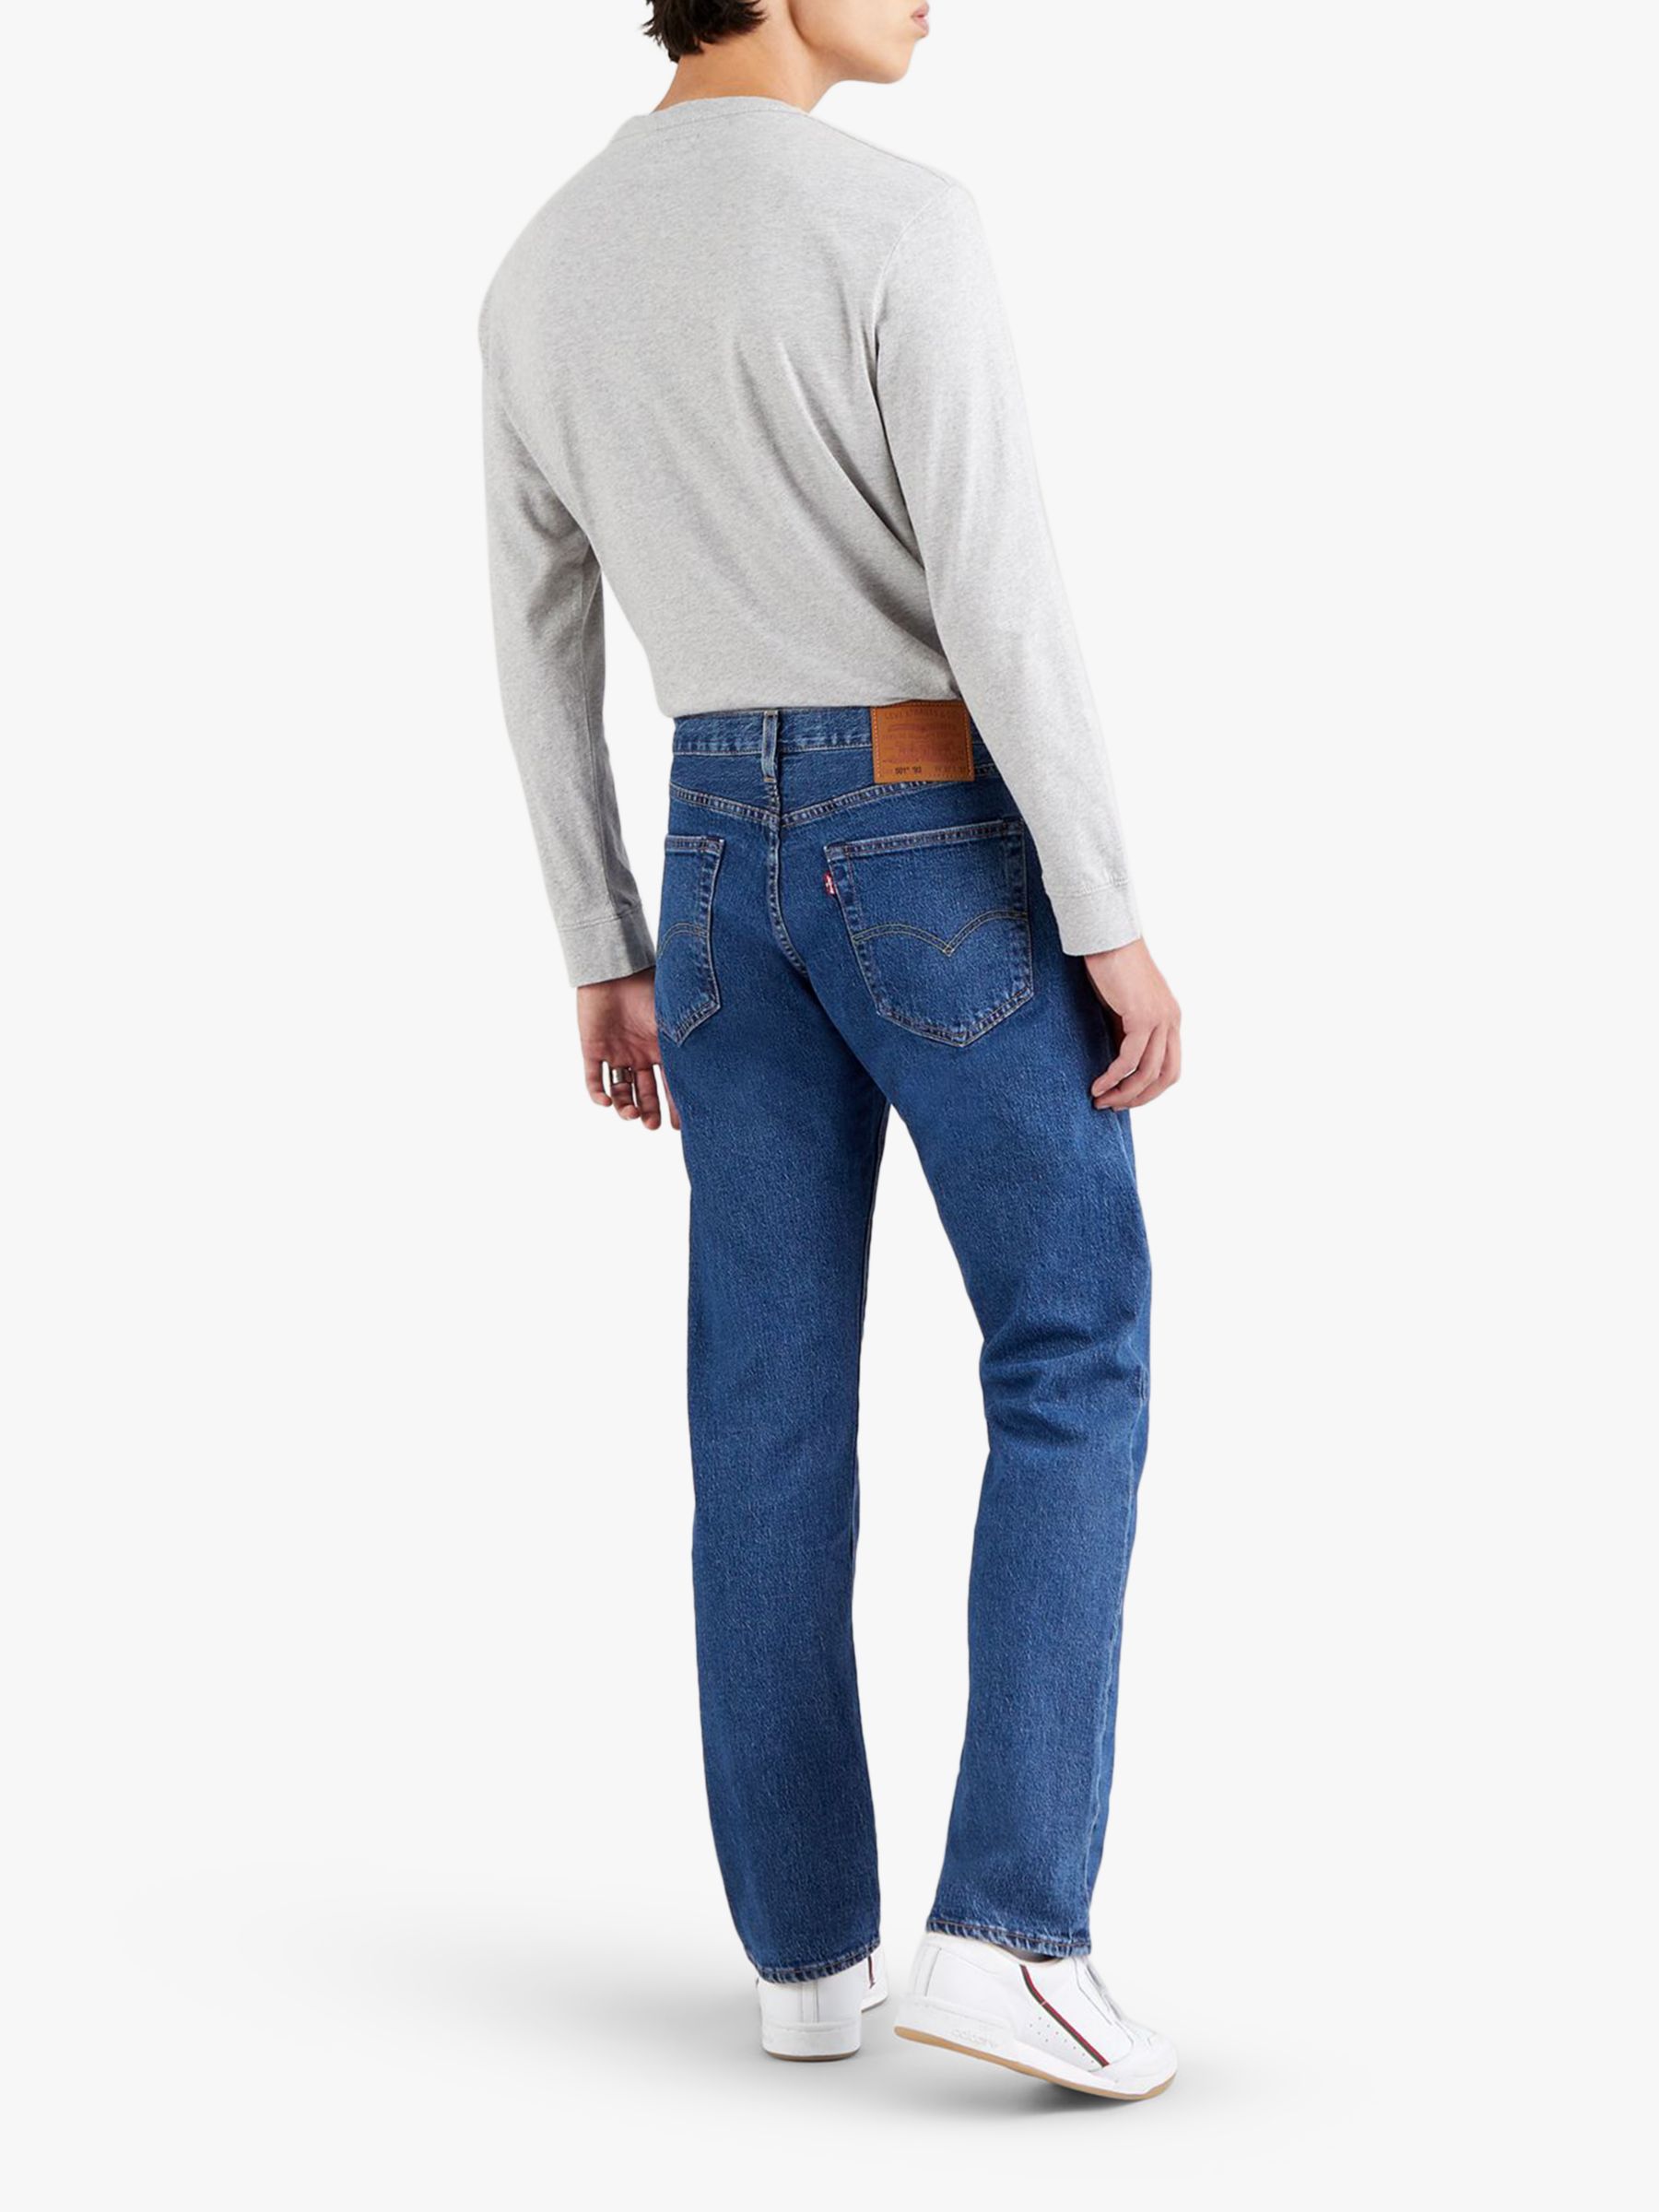 light blue 501 levi jeans